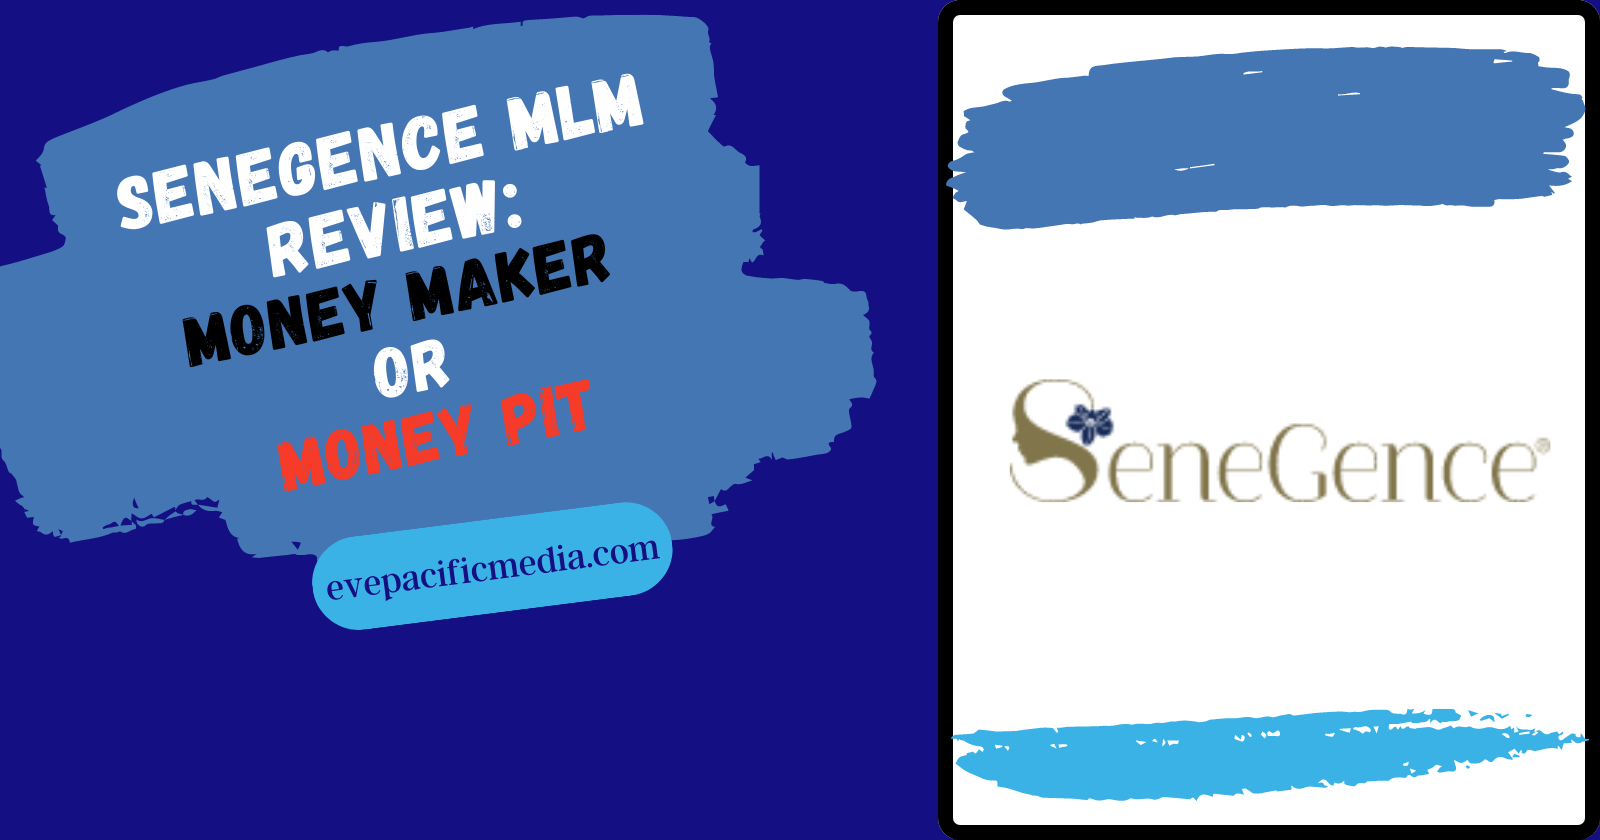 SeneGence MLM Review: Money Maker or Money Pit?